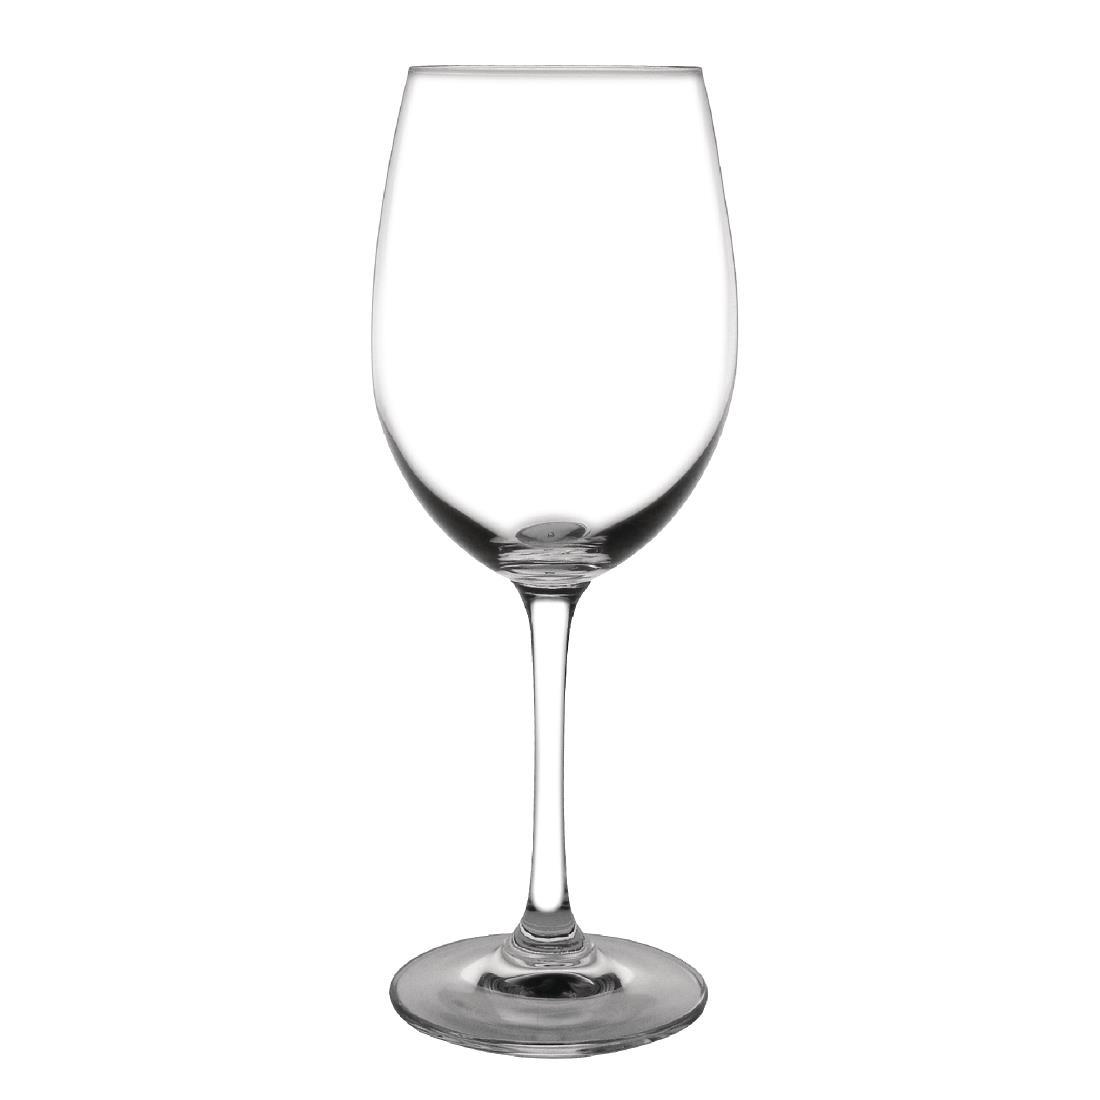 Olympia Modale Crystal Wine Glasses 520ml (Pack of 6) - GF725  - 1